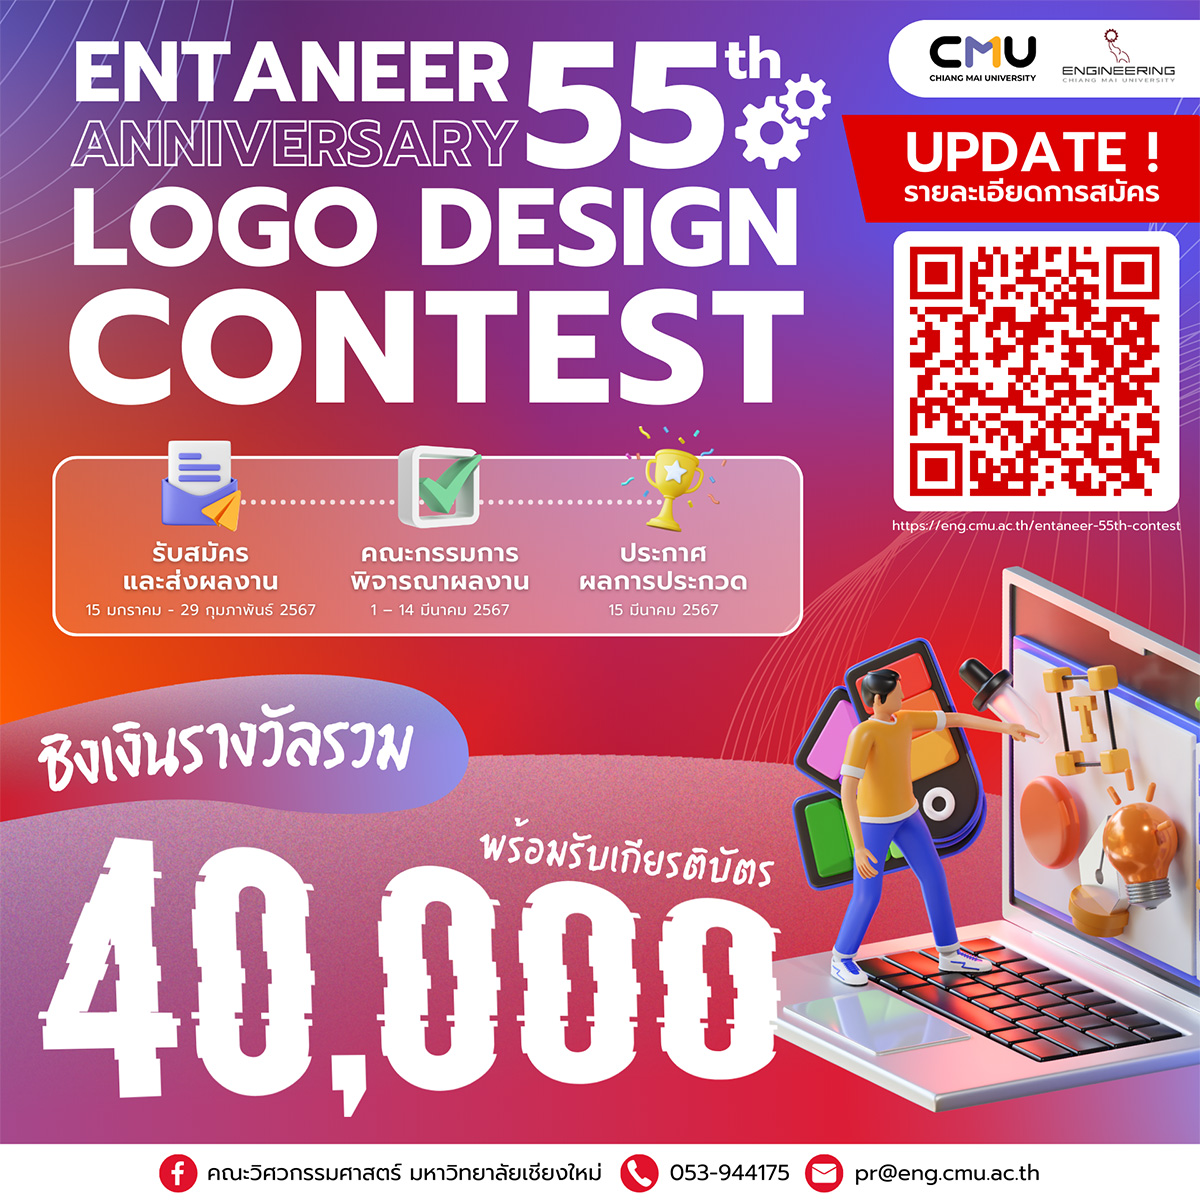 ENTANEER 55th Anniversary Logo Design Contest